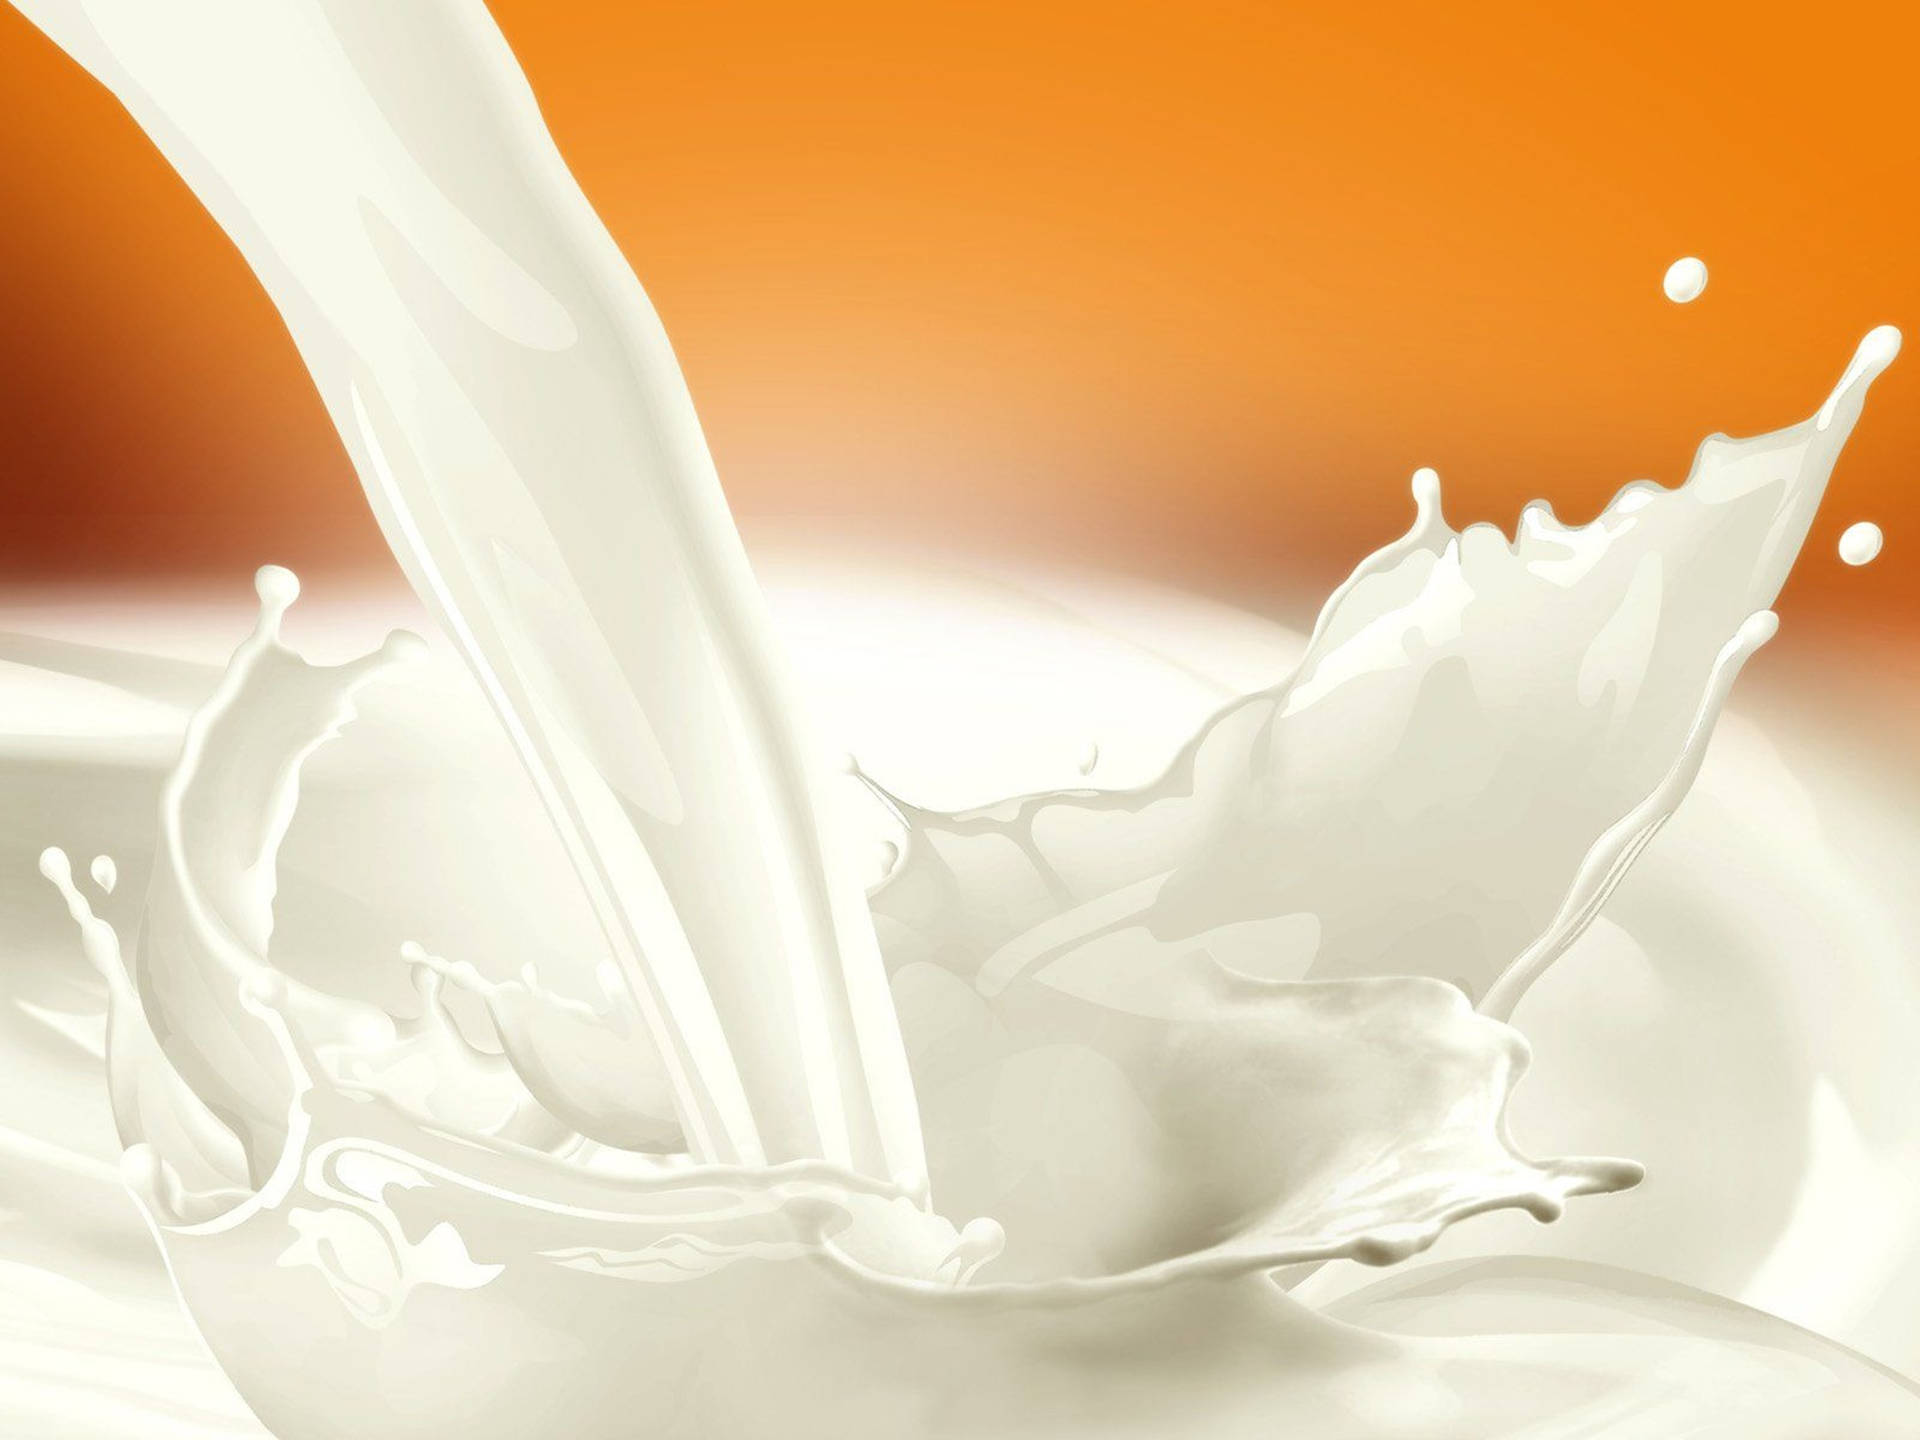 Caption: Dynamic Milk Splash Artistic Illustration